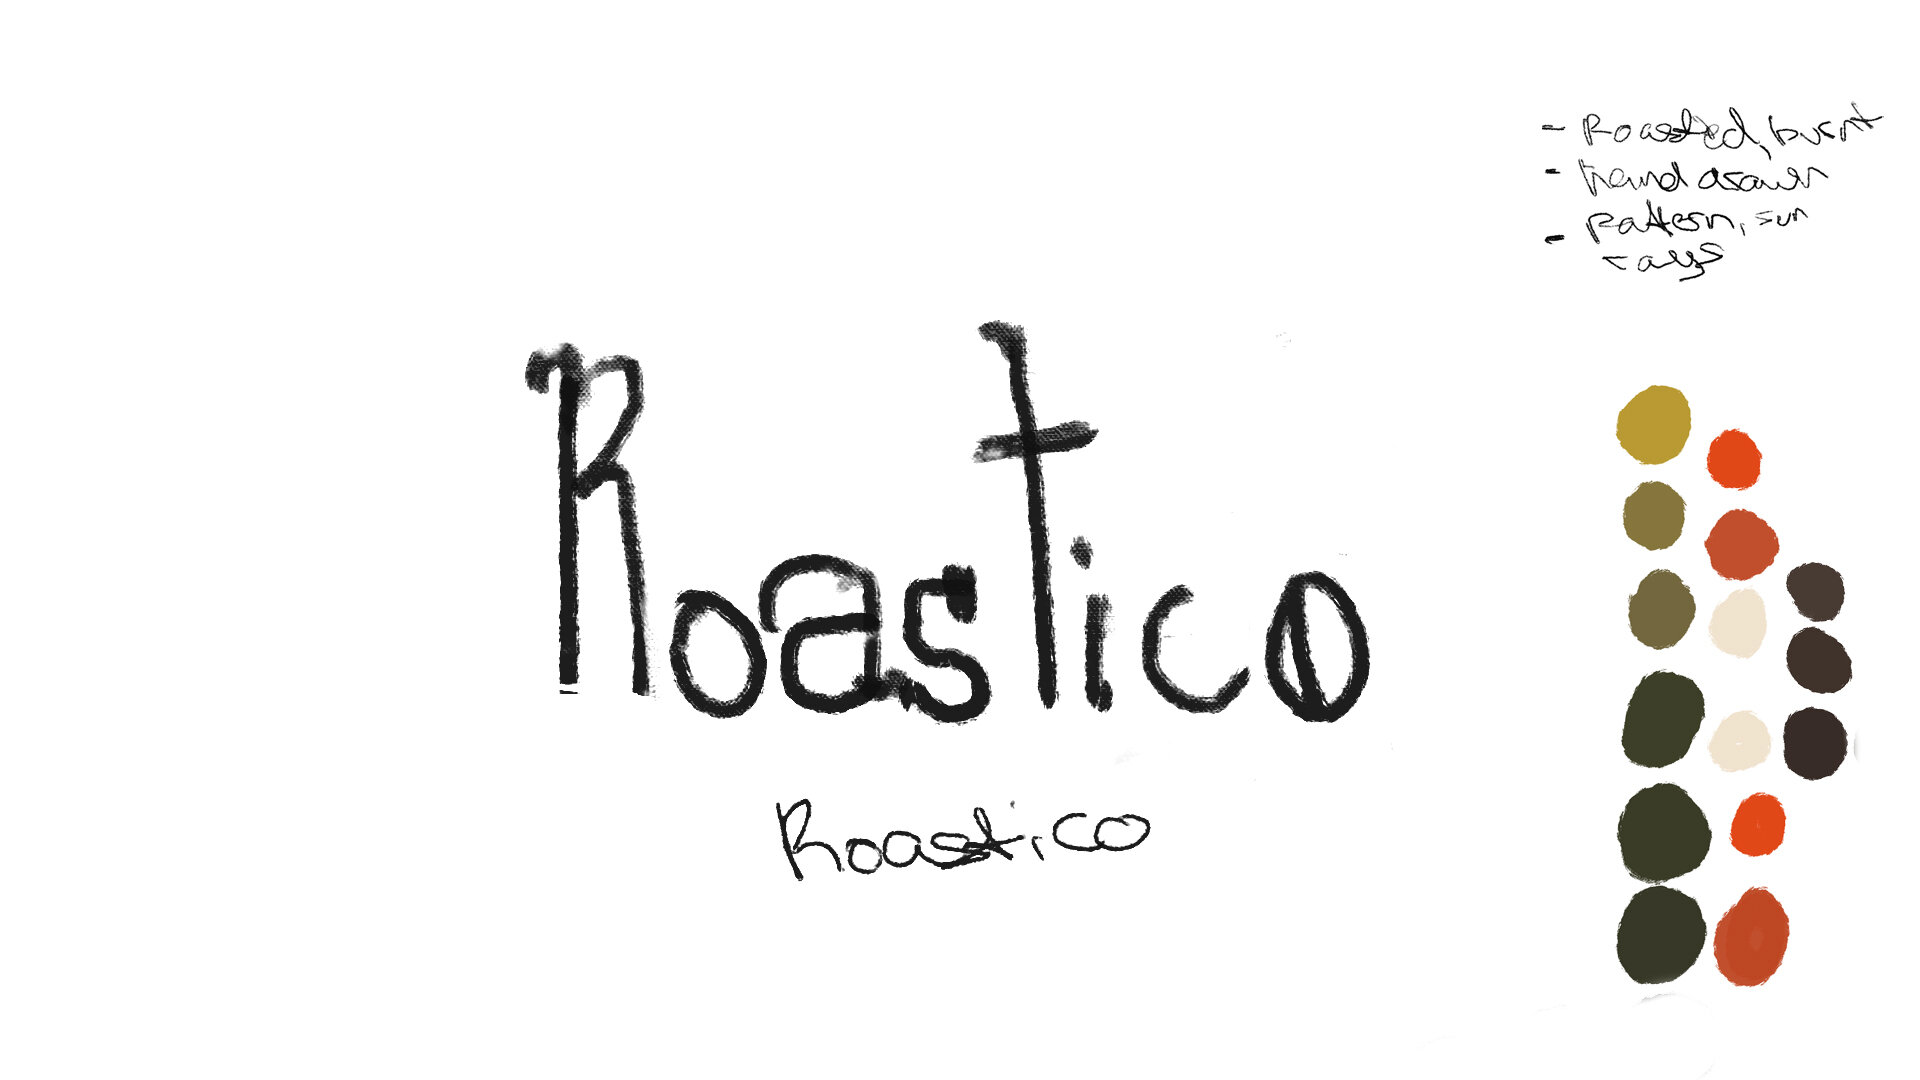 Roastico Logo SketchArtboard 4.jpg